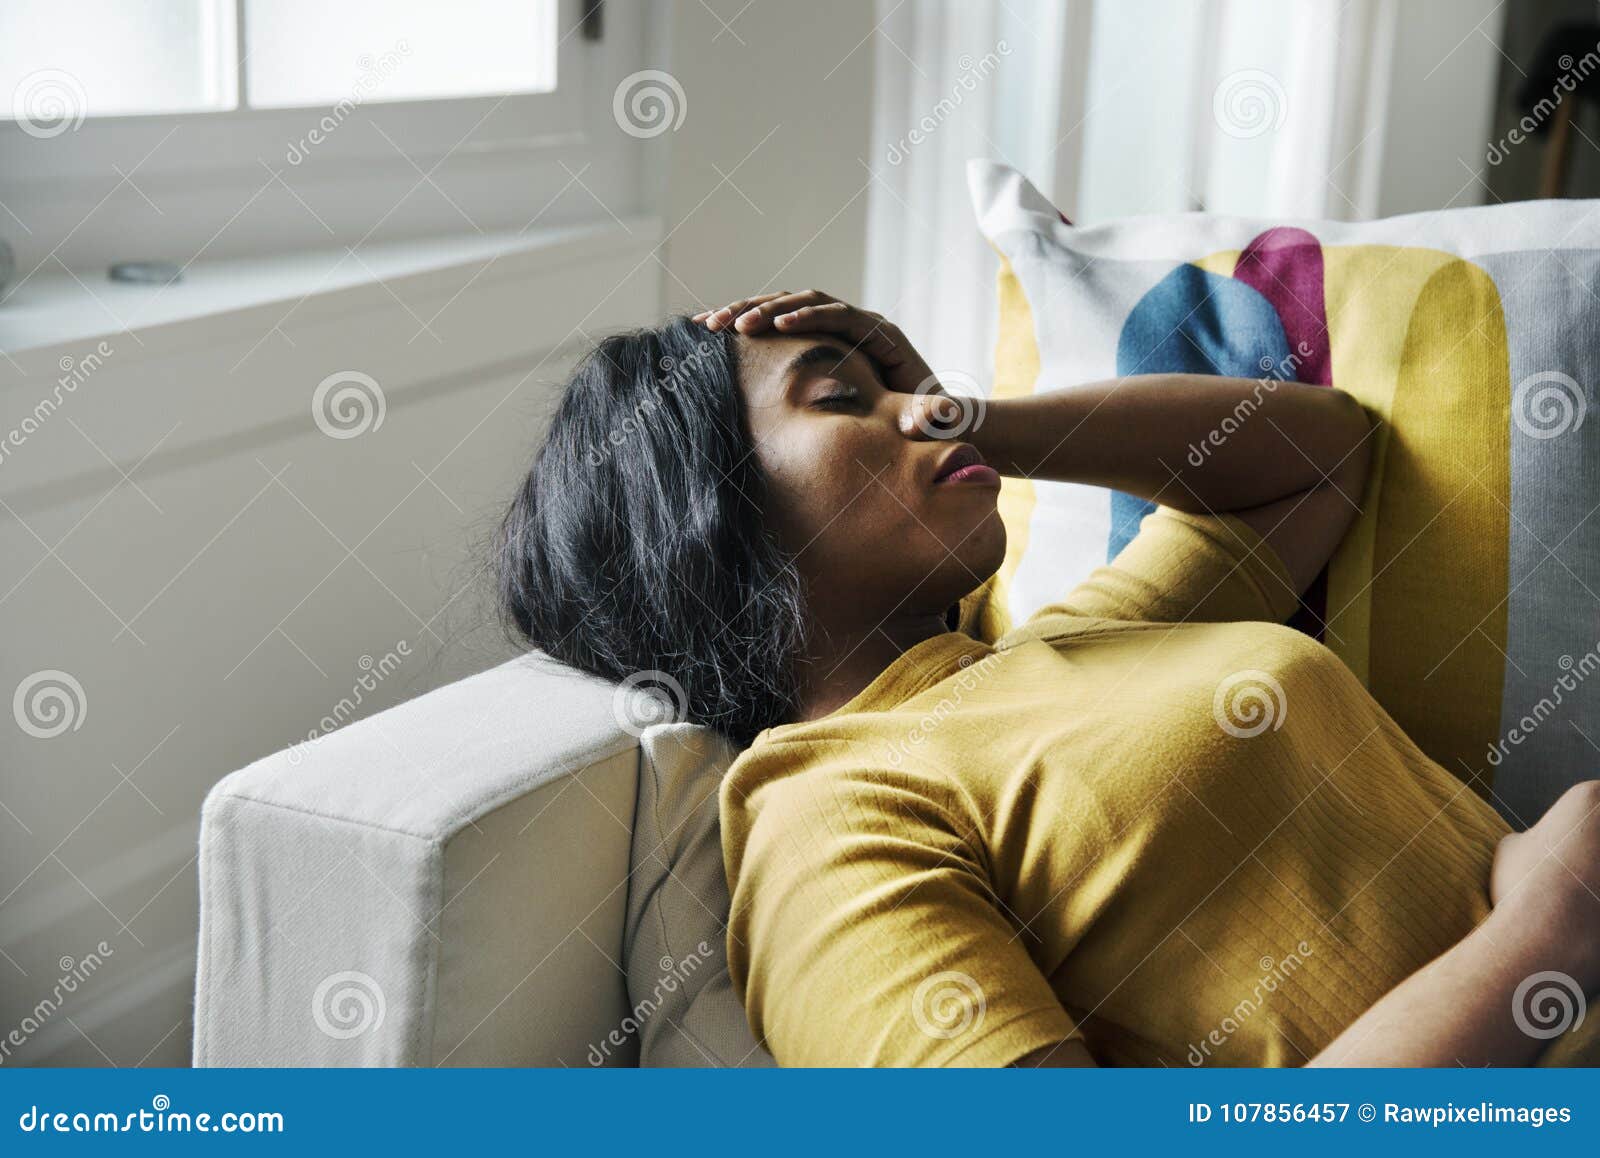 black woman headache and sleeping